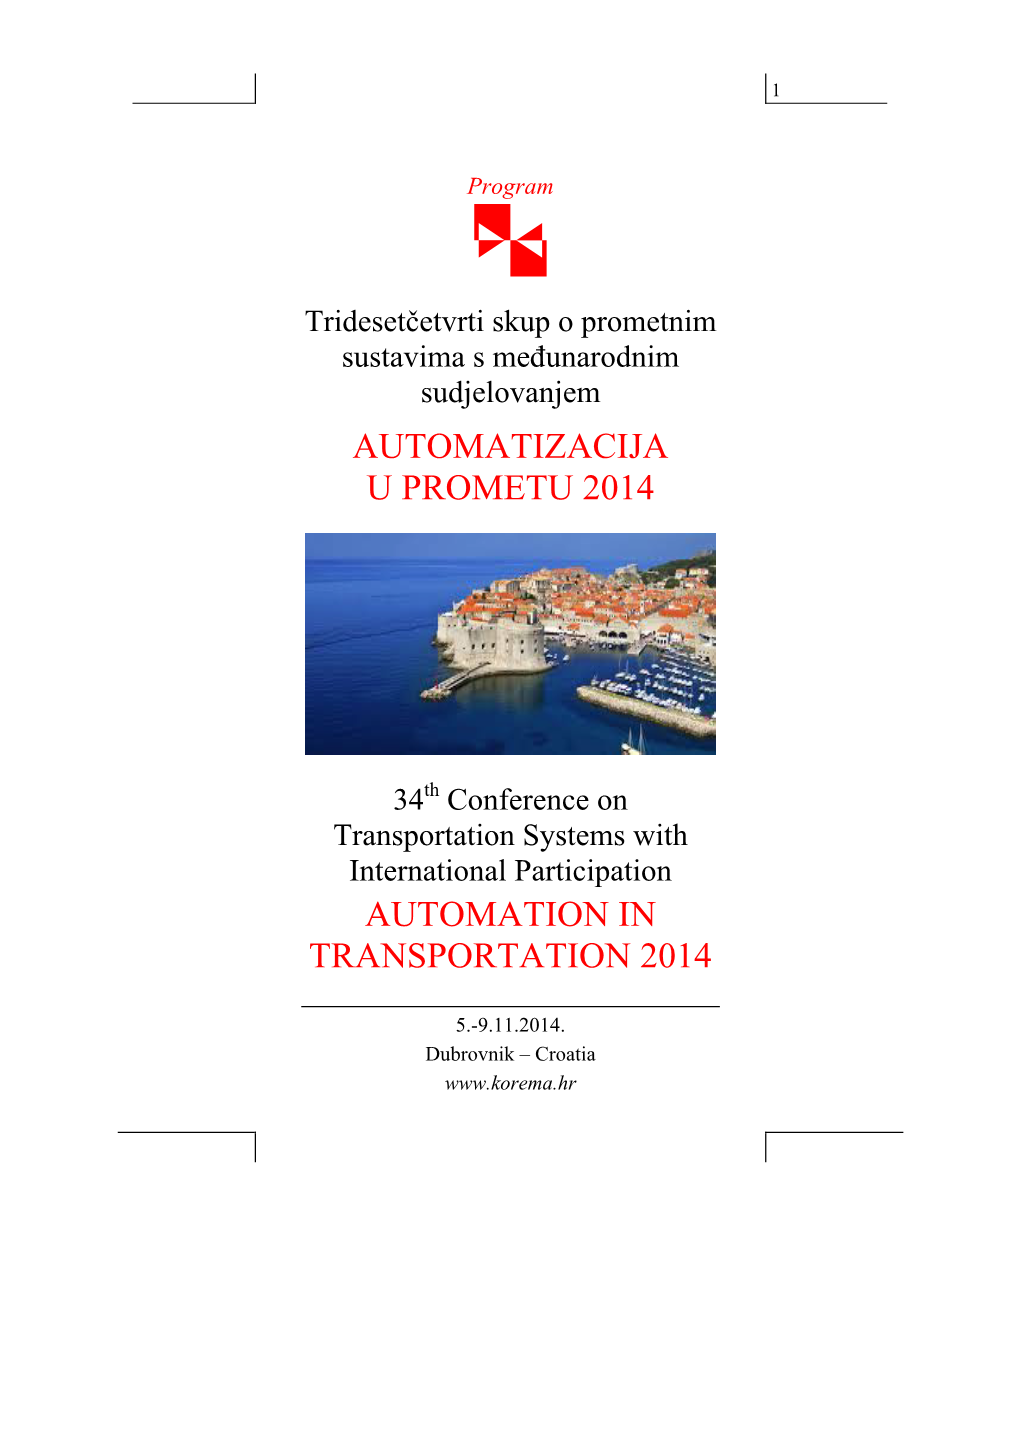 Automatizacija U Prometu 2014 Automation in Transportation 2014 Dubrovnik – Croatia, 5.-9.11.2014